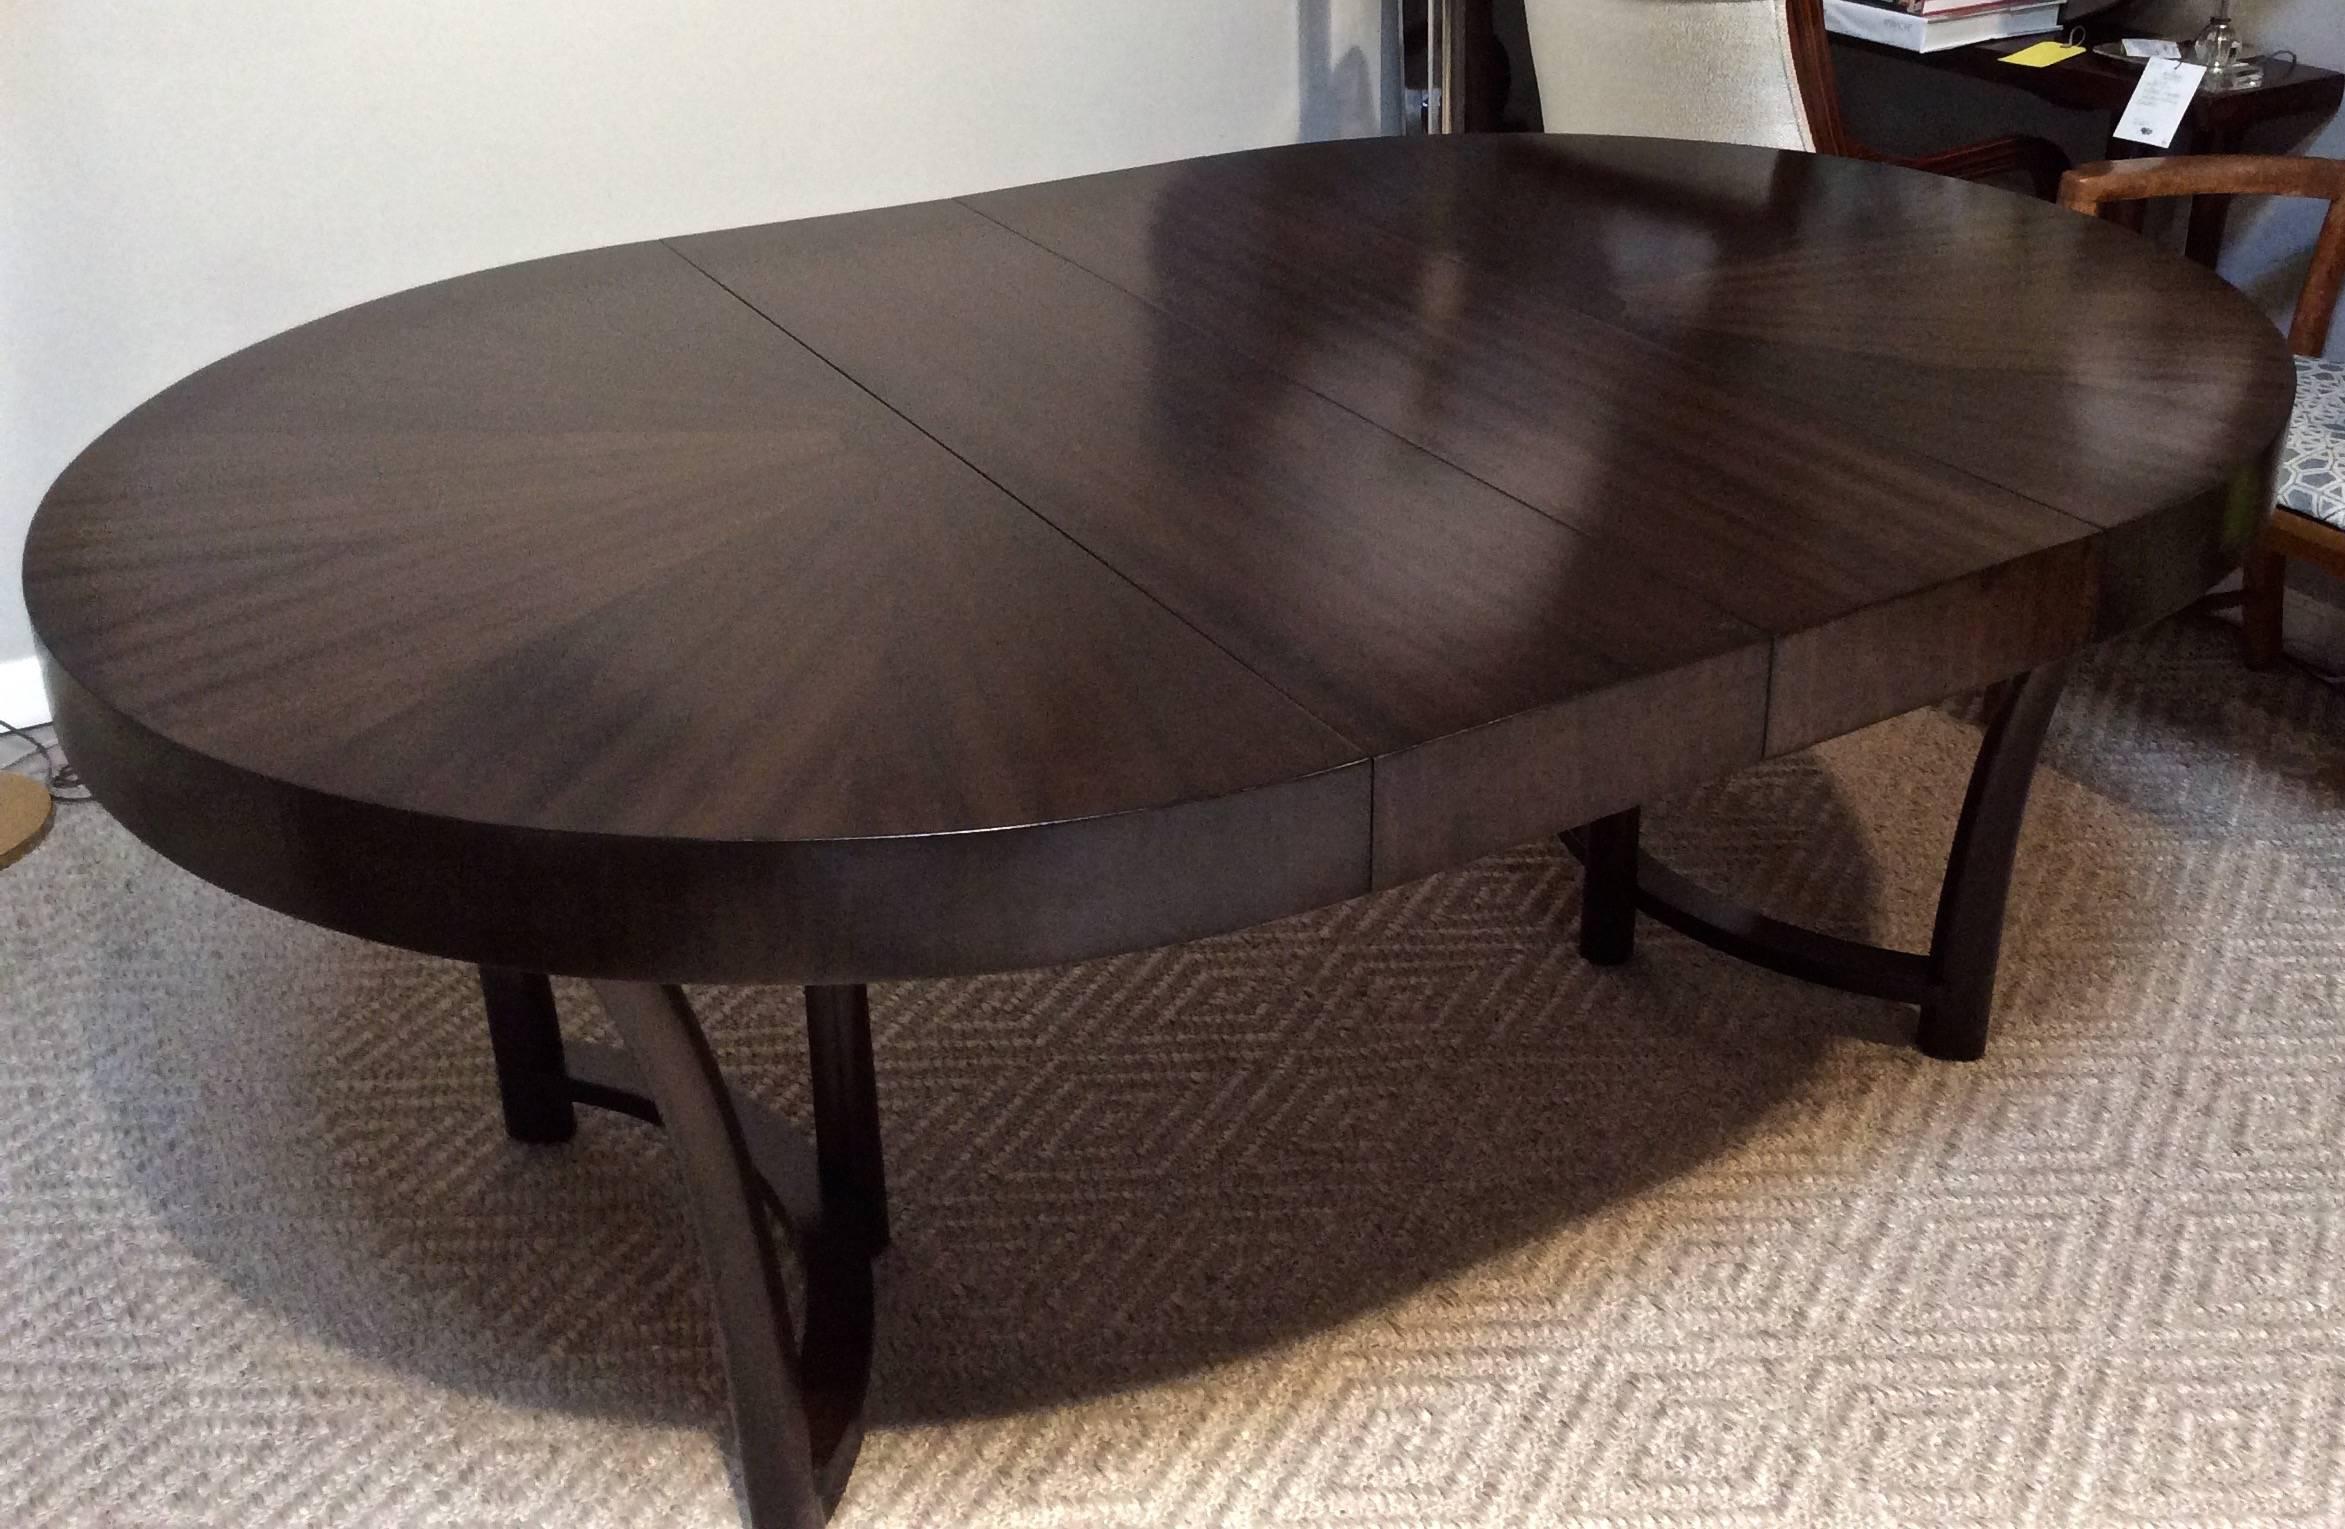 American Round Widdicomb Walnut Extension Table, Designed by Robsjohn-Gibbings